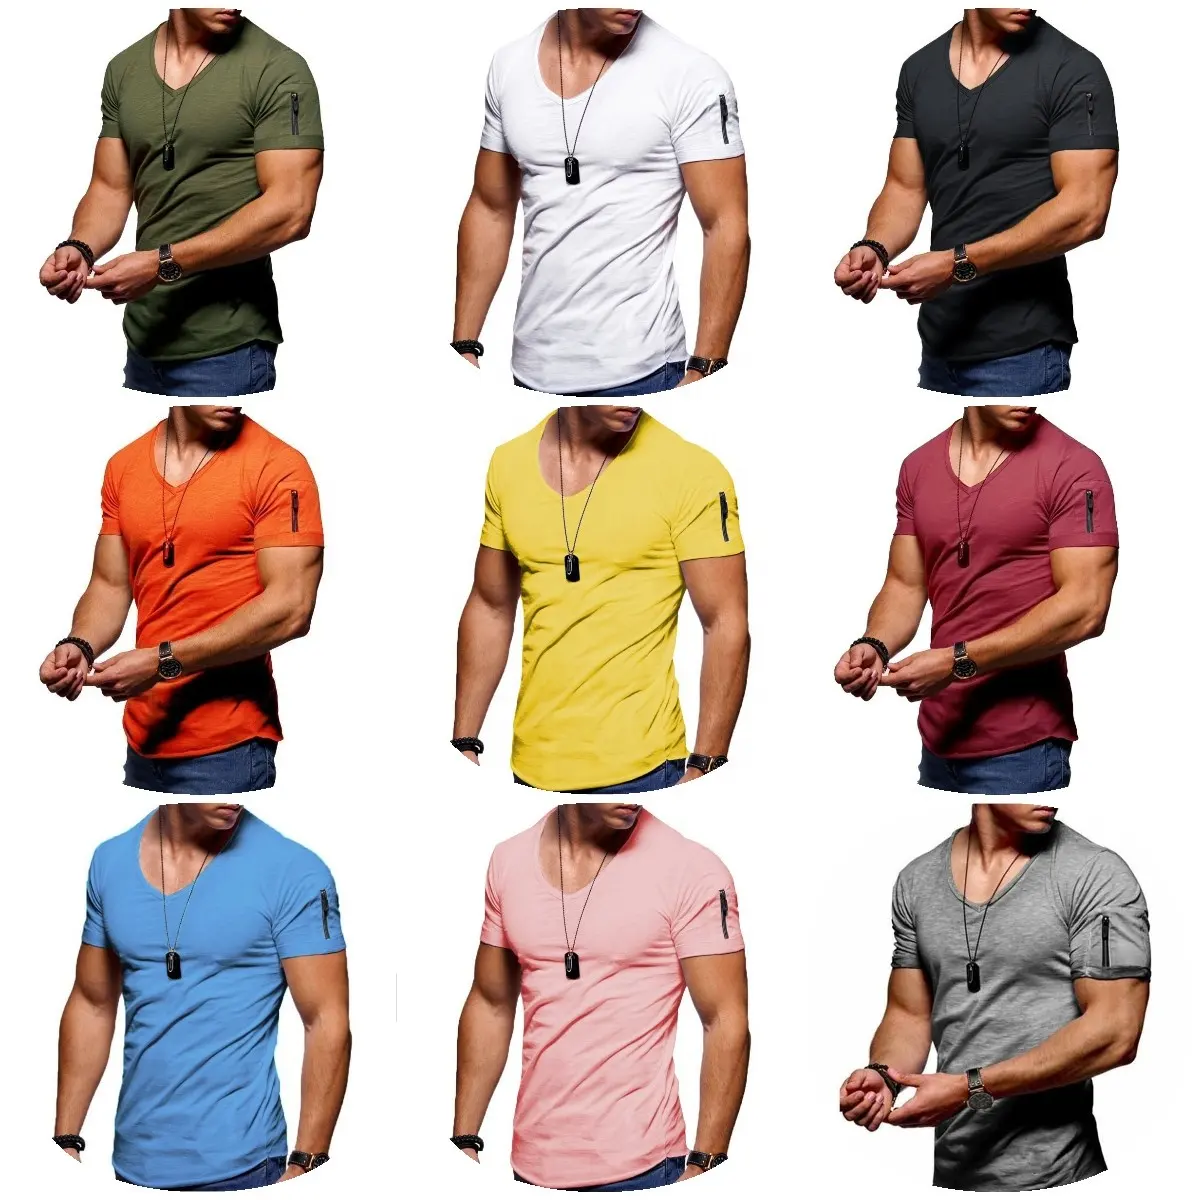 Men's T shirt Sports Tee Shirt Plain V Neck Normal Short Sleeve Zipper Clothing Apparel Muscle Gym Tshirt For Men